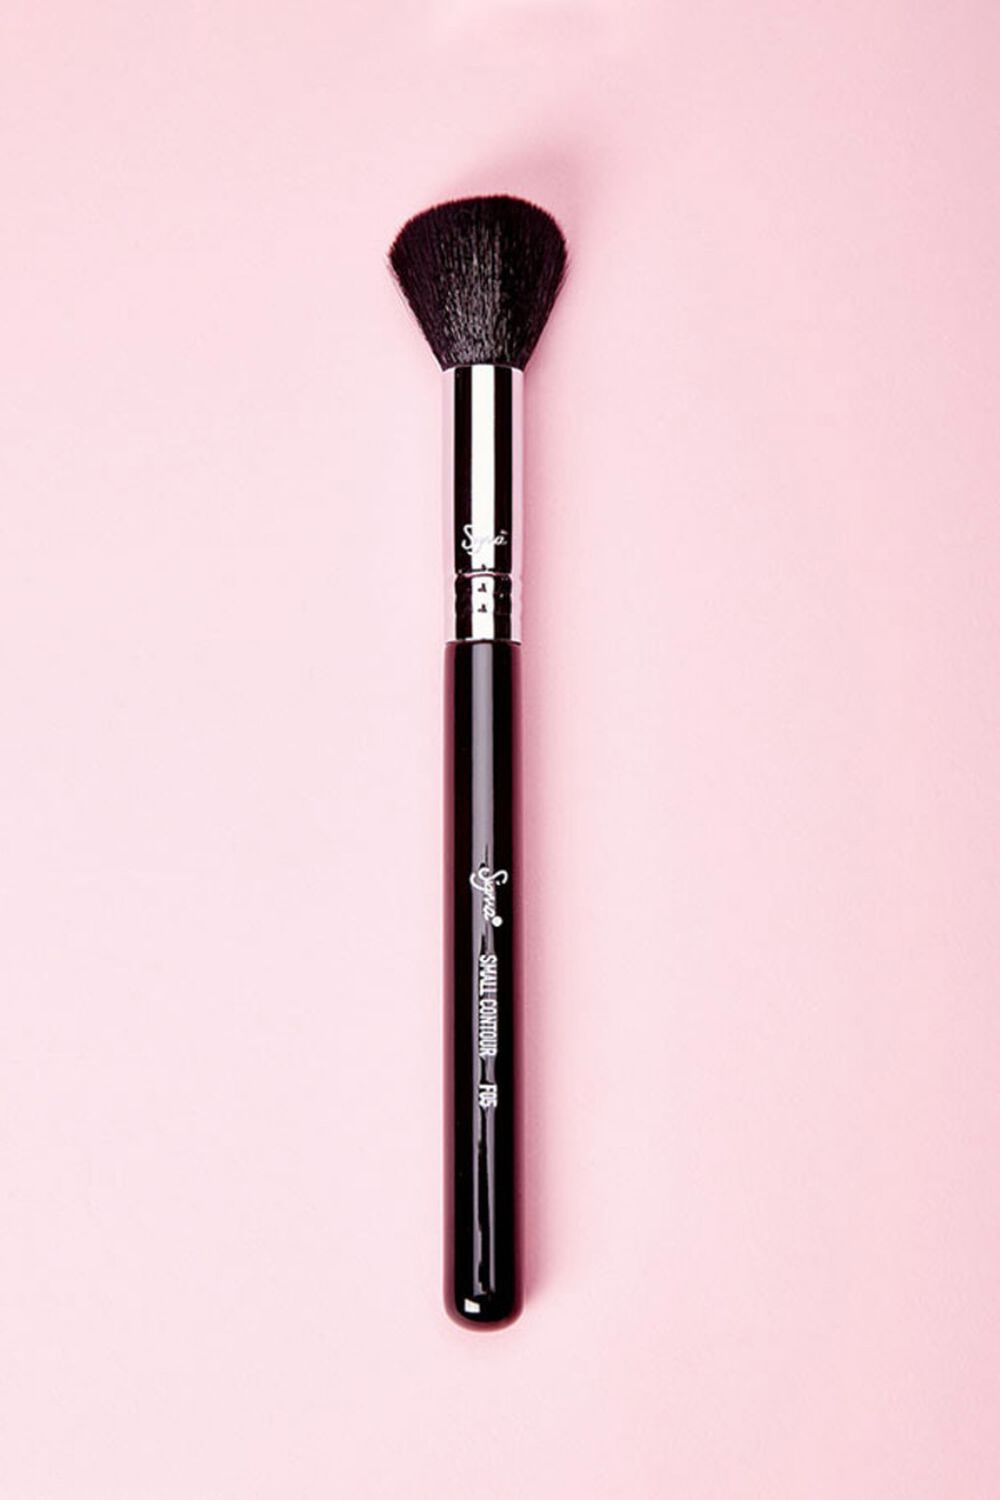 BLACK Sigma Beauty F05 – Small Contour Brush, image 1